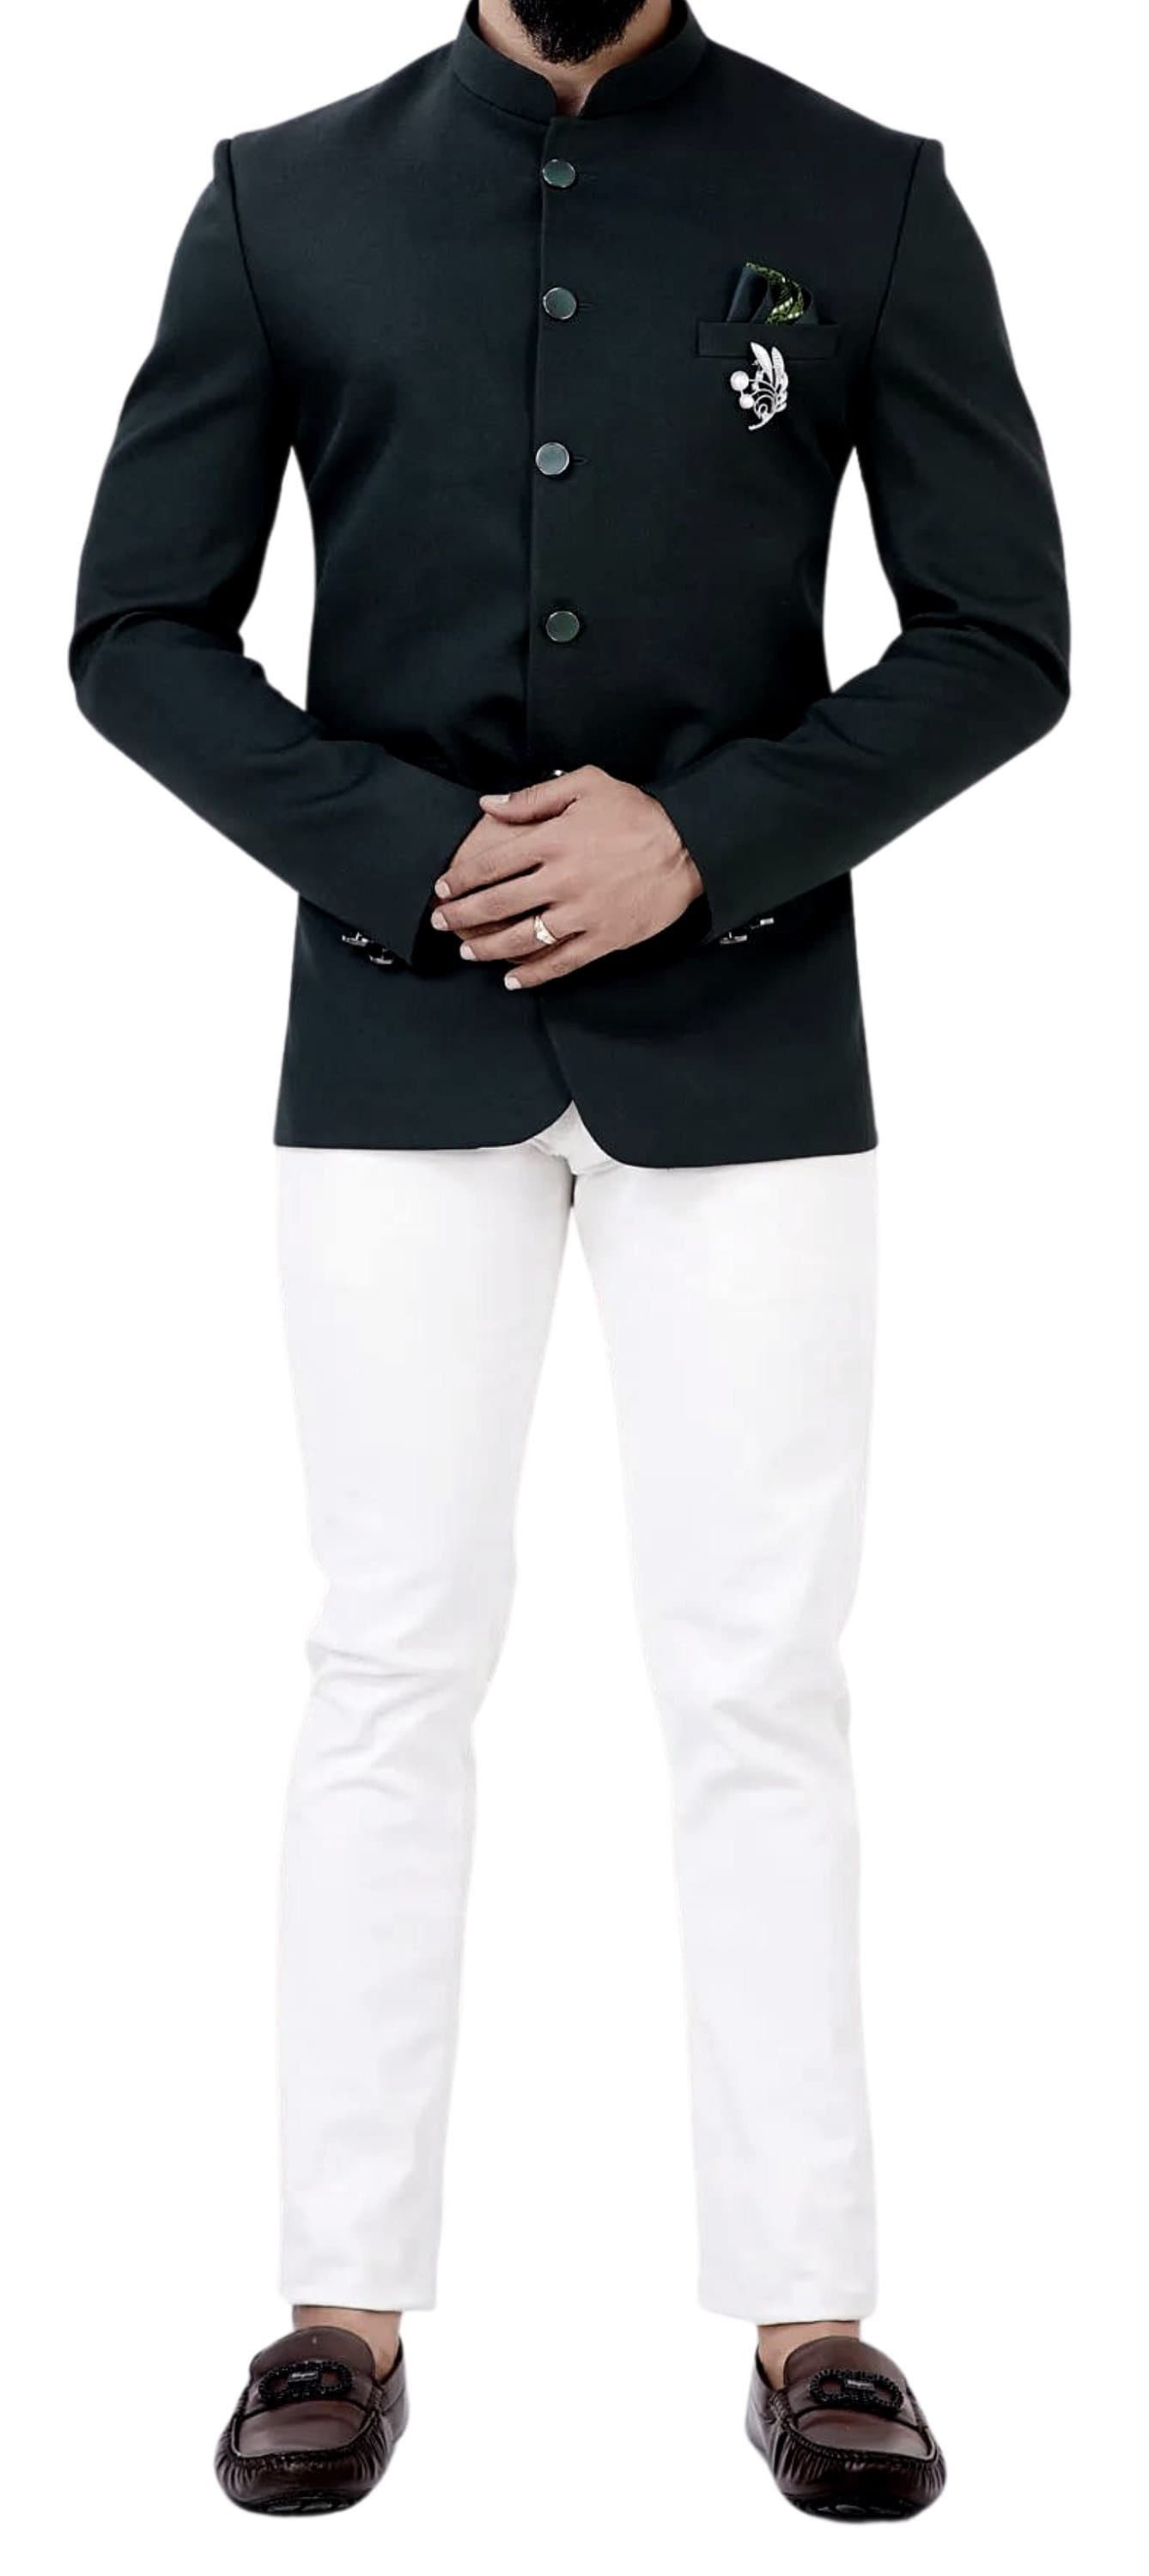 Woven Terry Rayon Jodhpuri Suit in Black : MHG1011